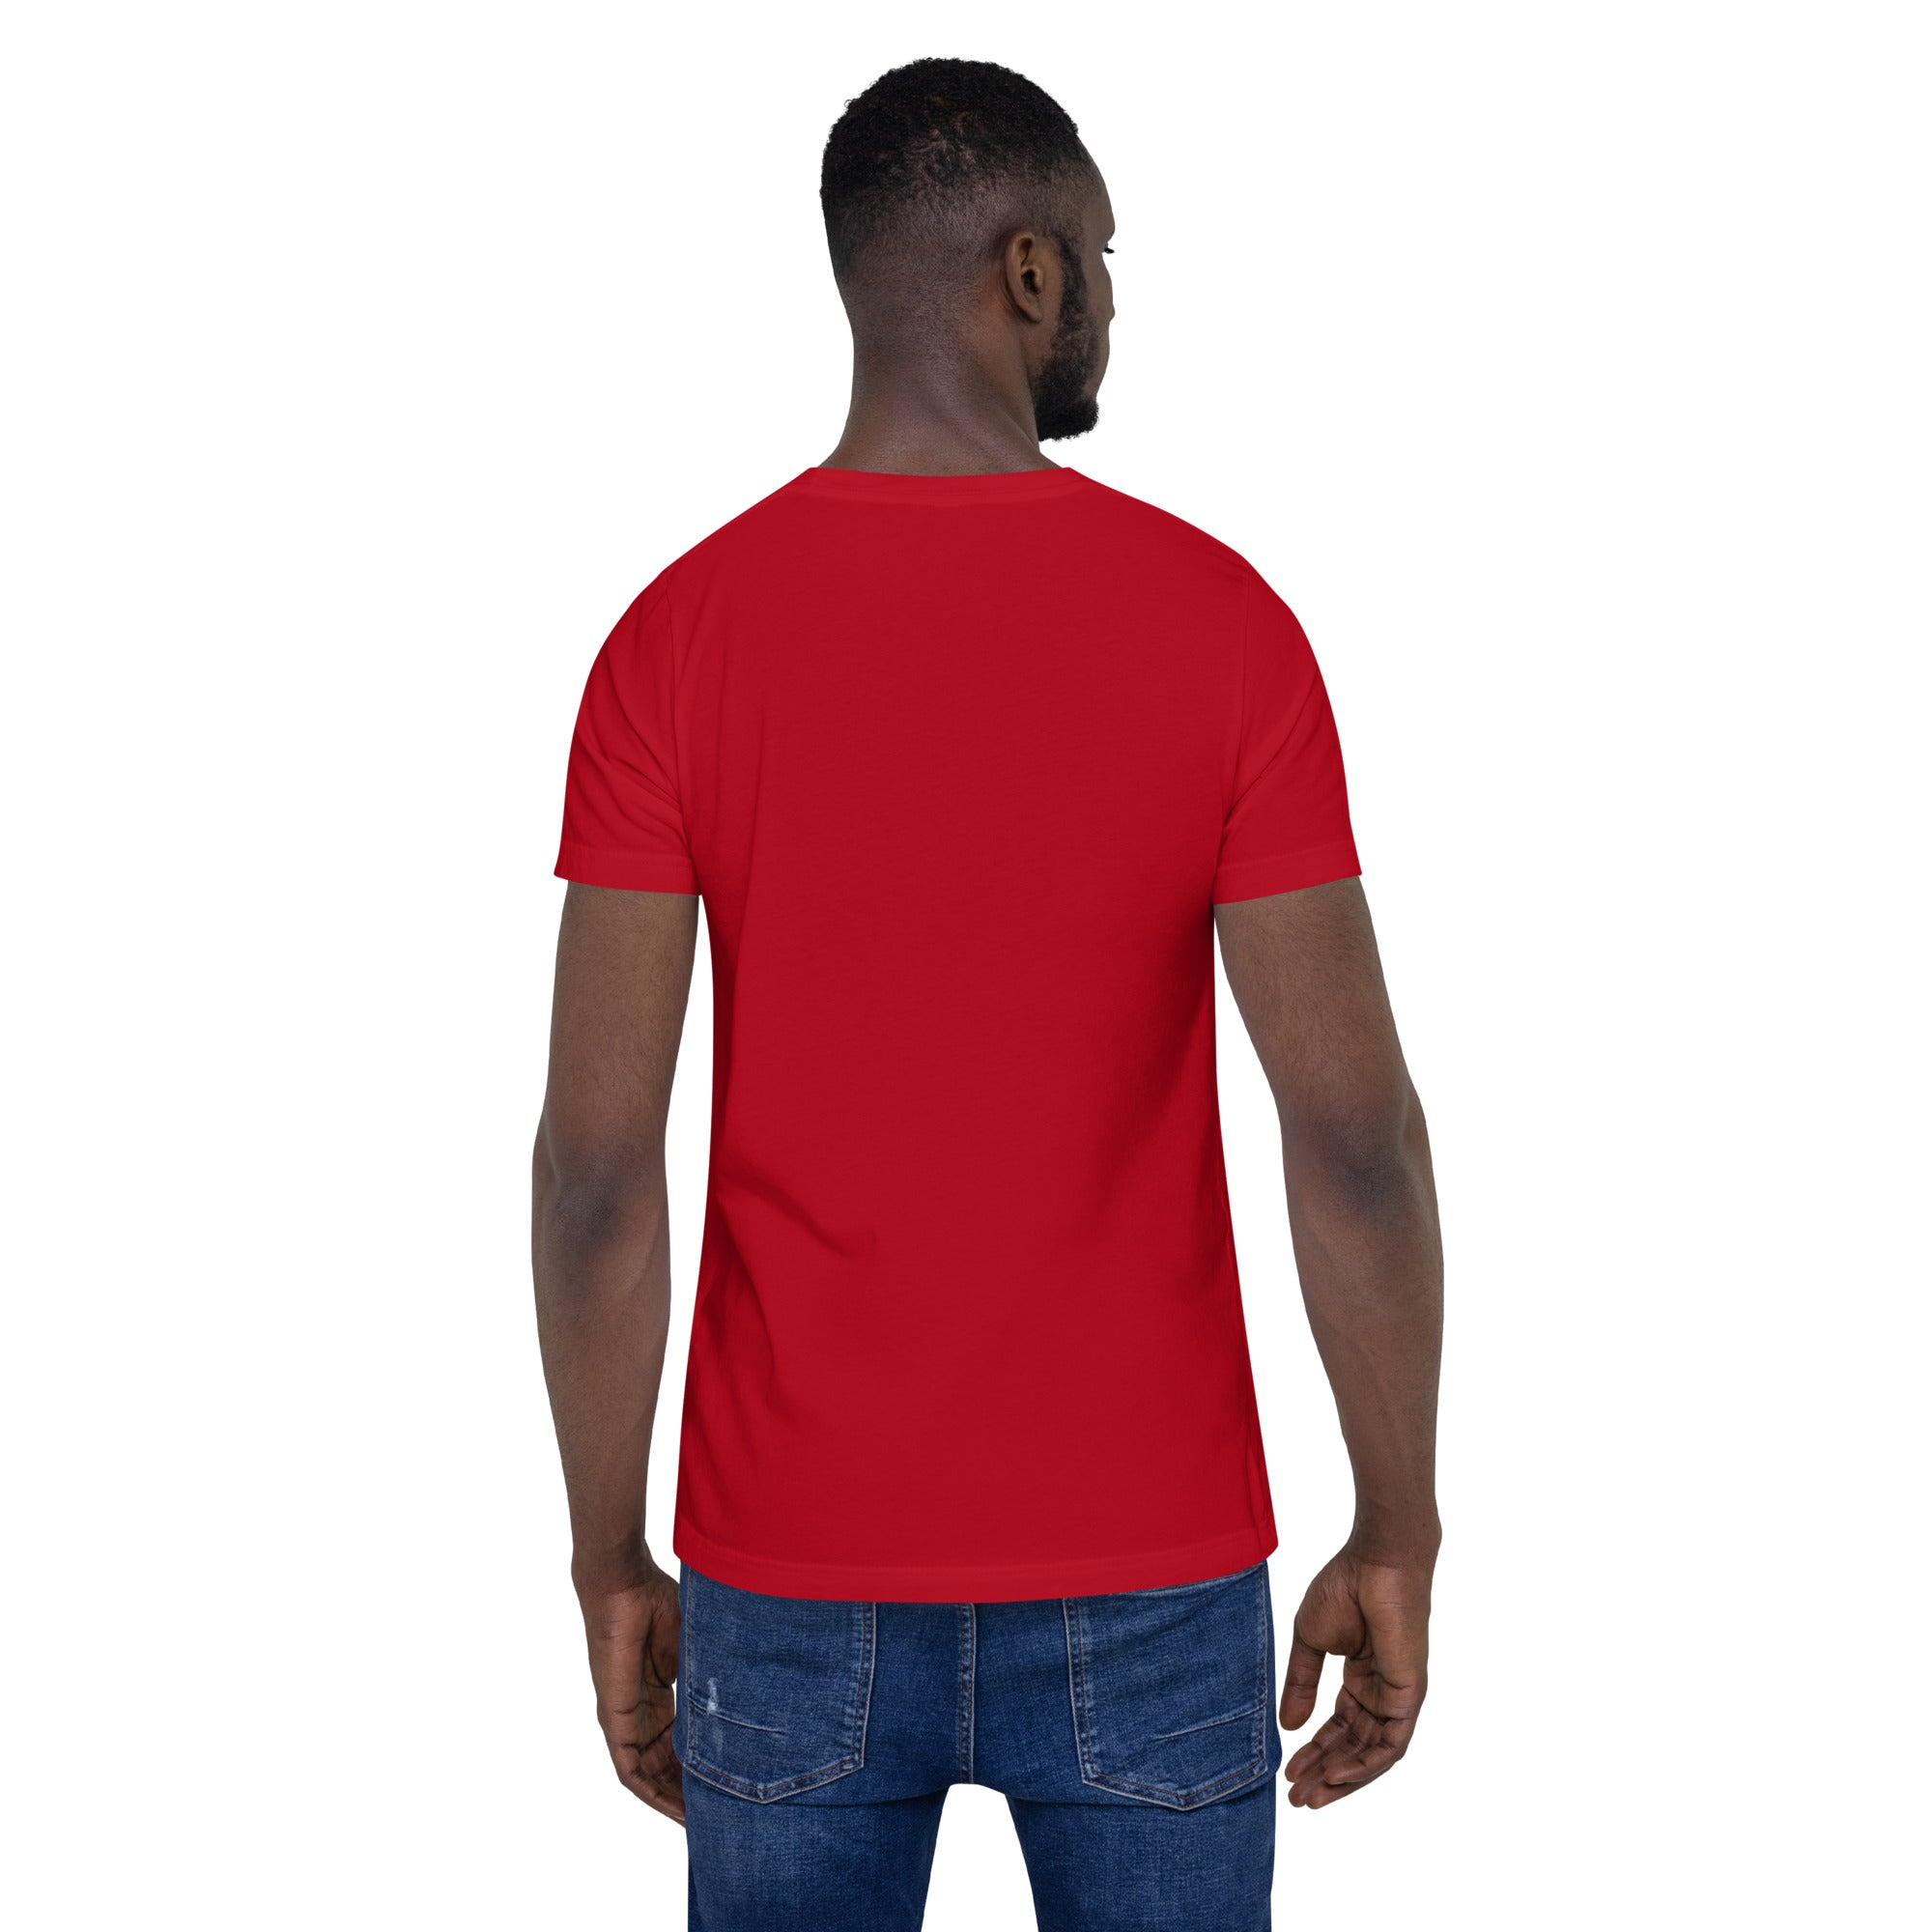 Coppell Logo White - Red Unisex t-shirt